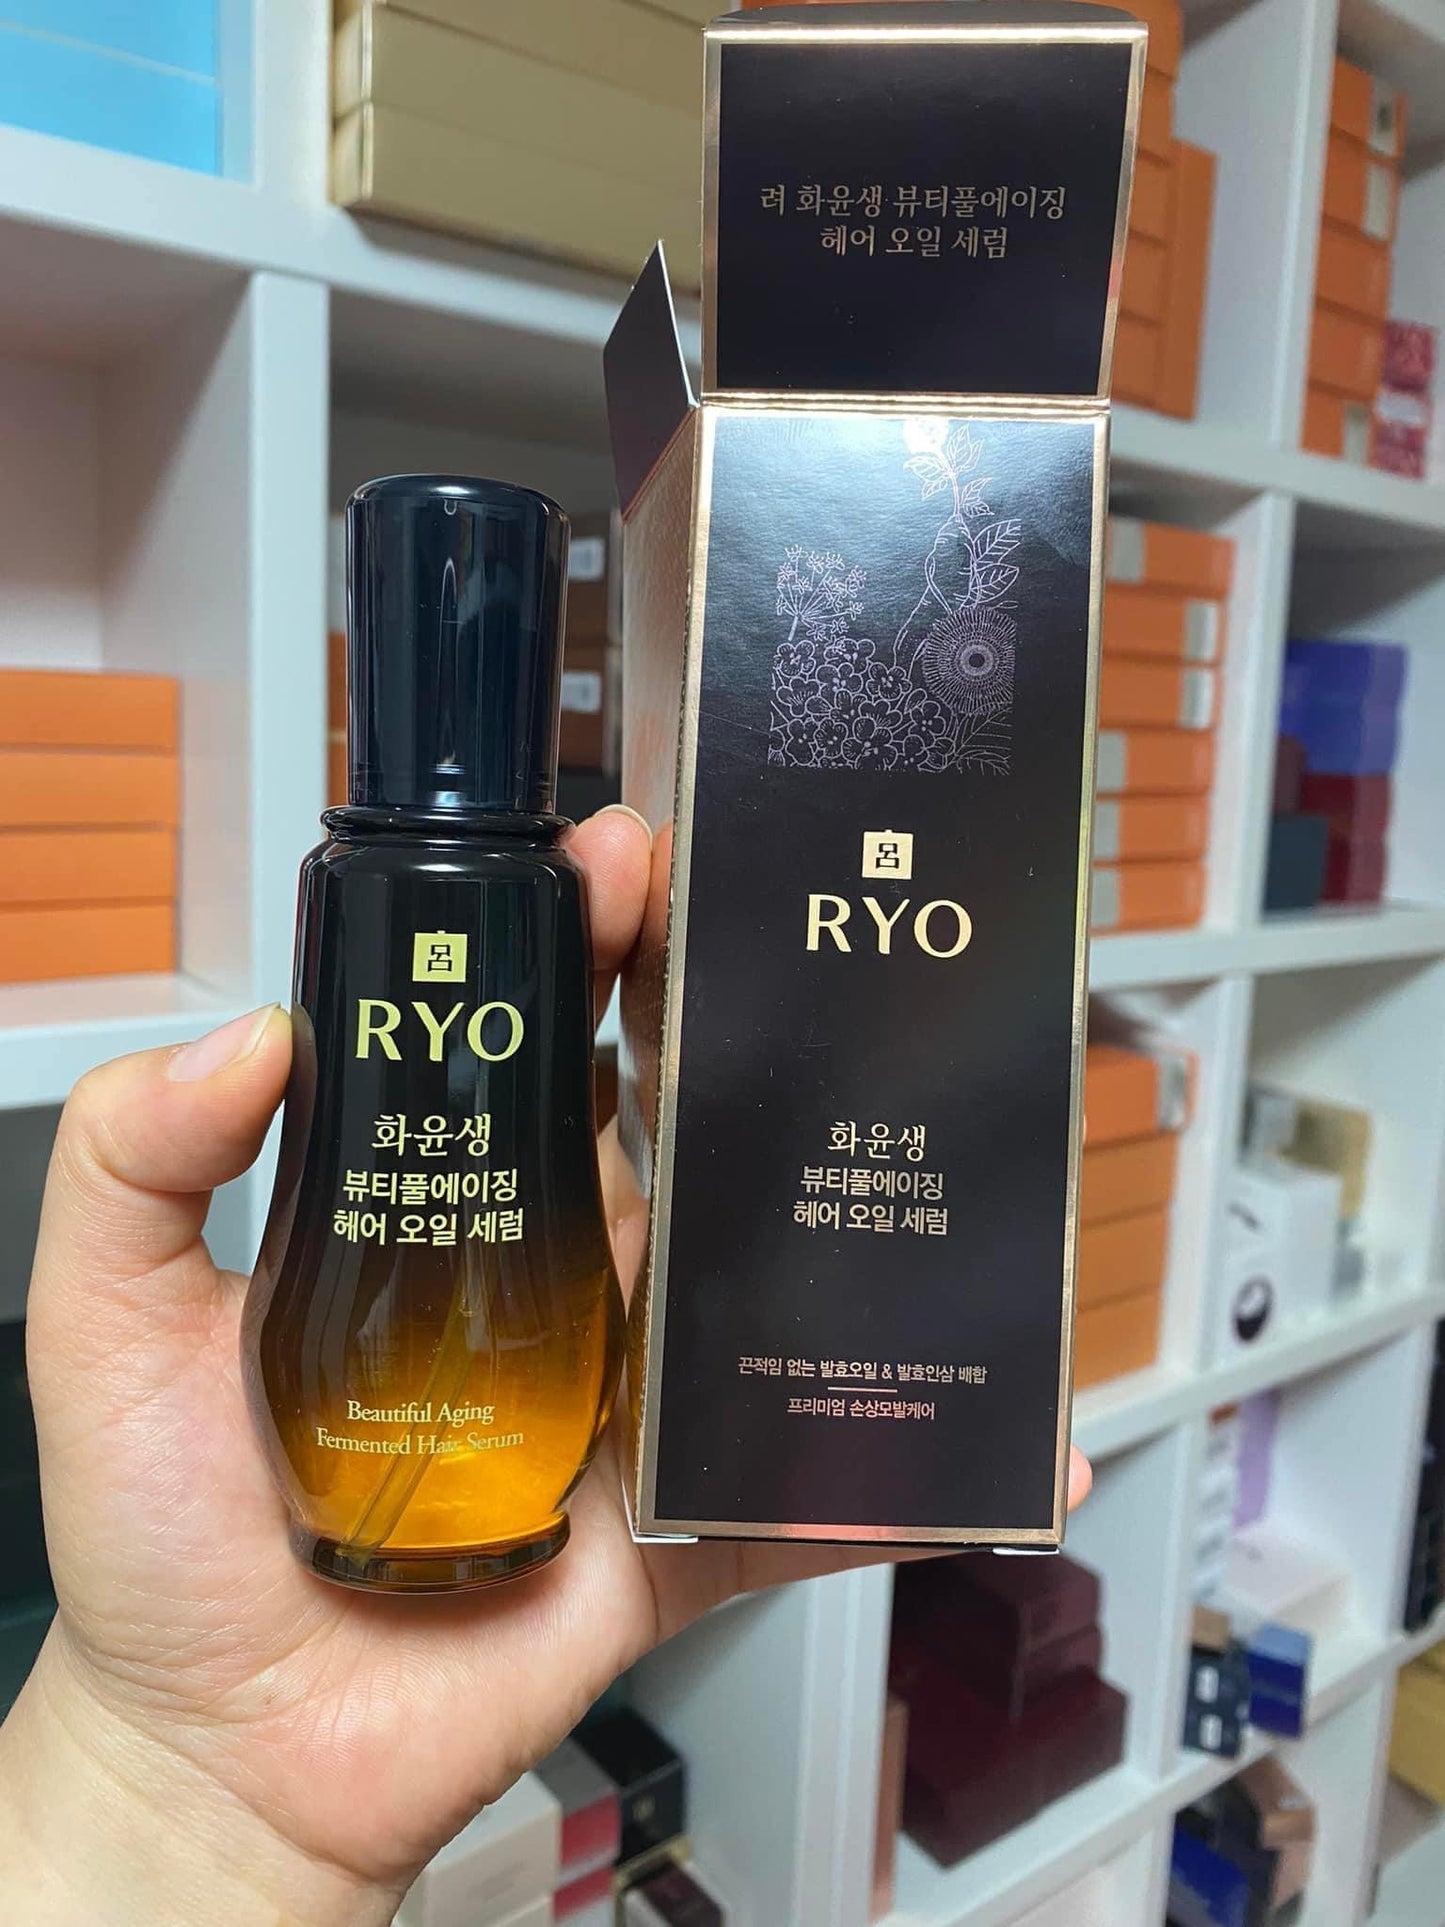 Ryo beautiful aging fermented hair serum